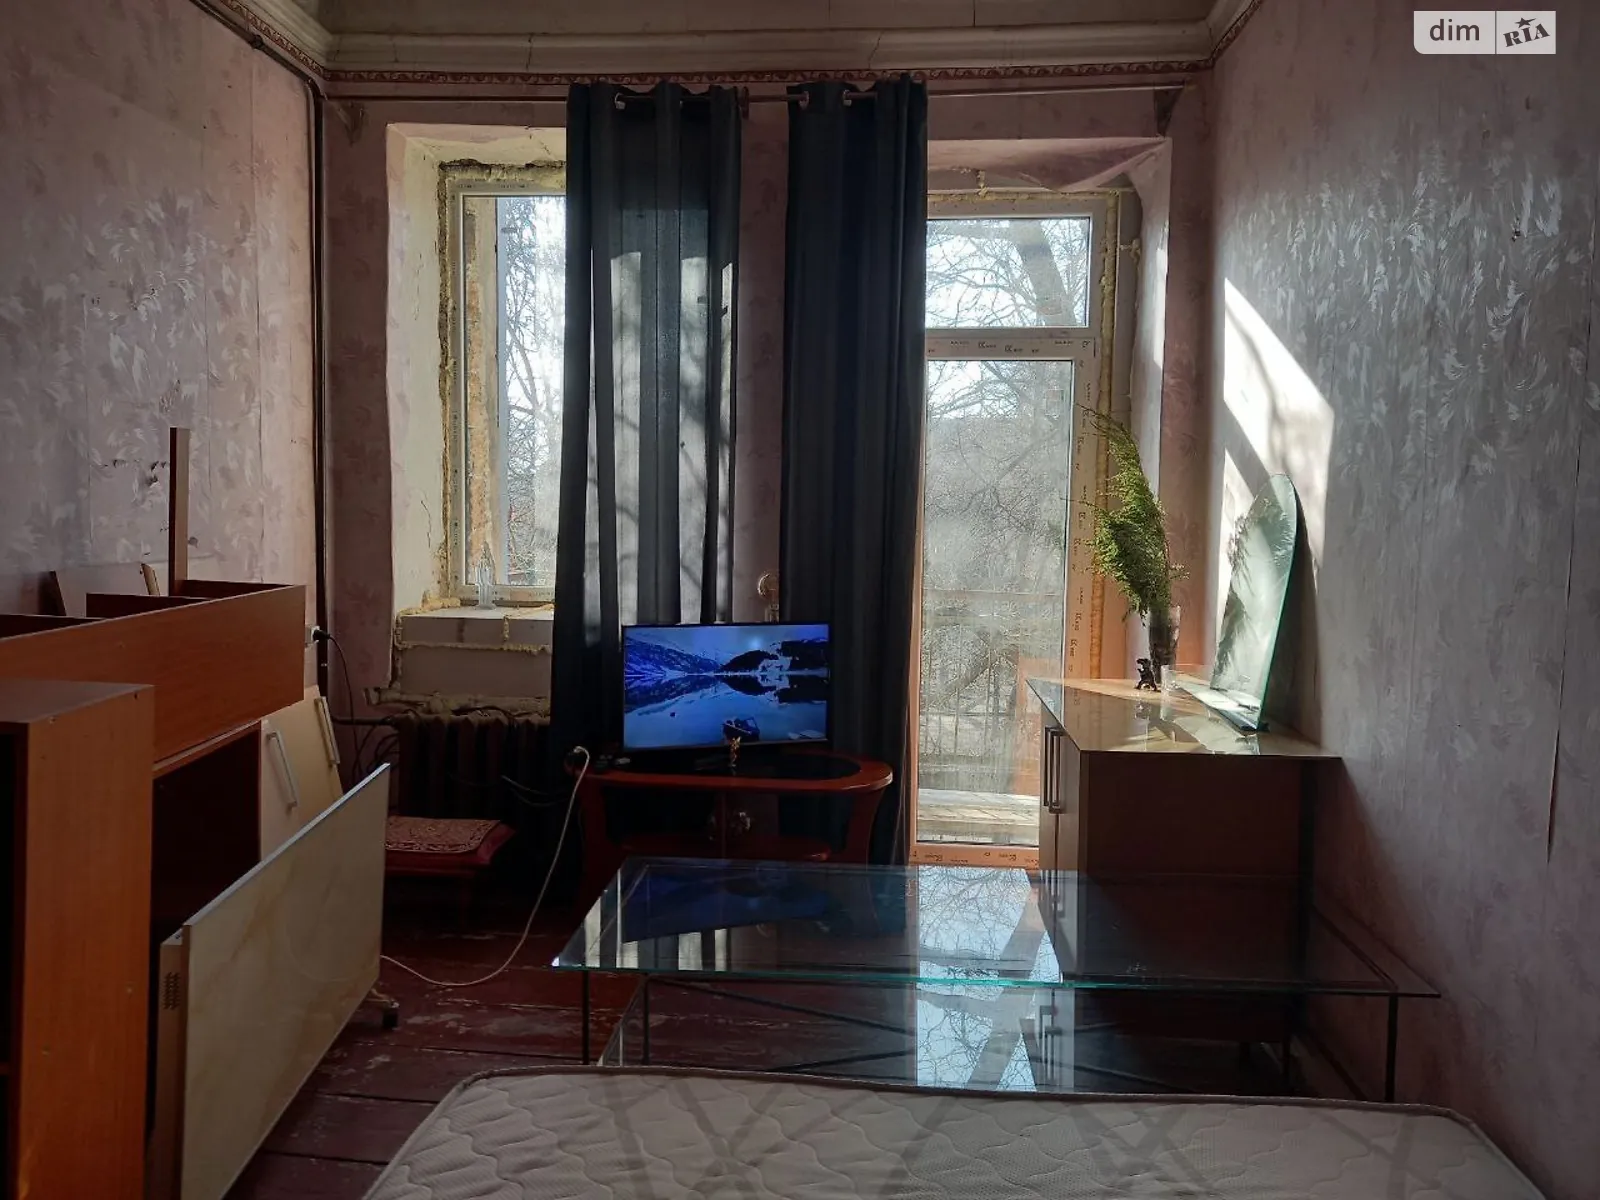 Продается комната 62 кв. м в Одессе, цена: 20000 $ - фото 1